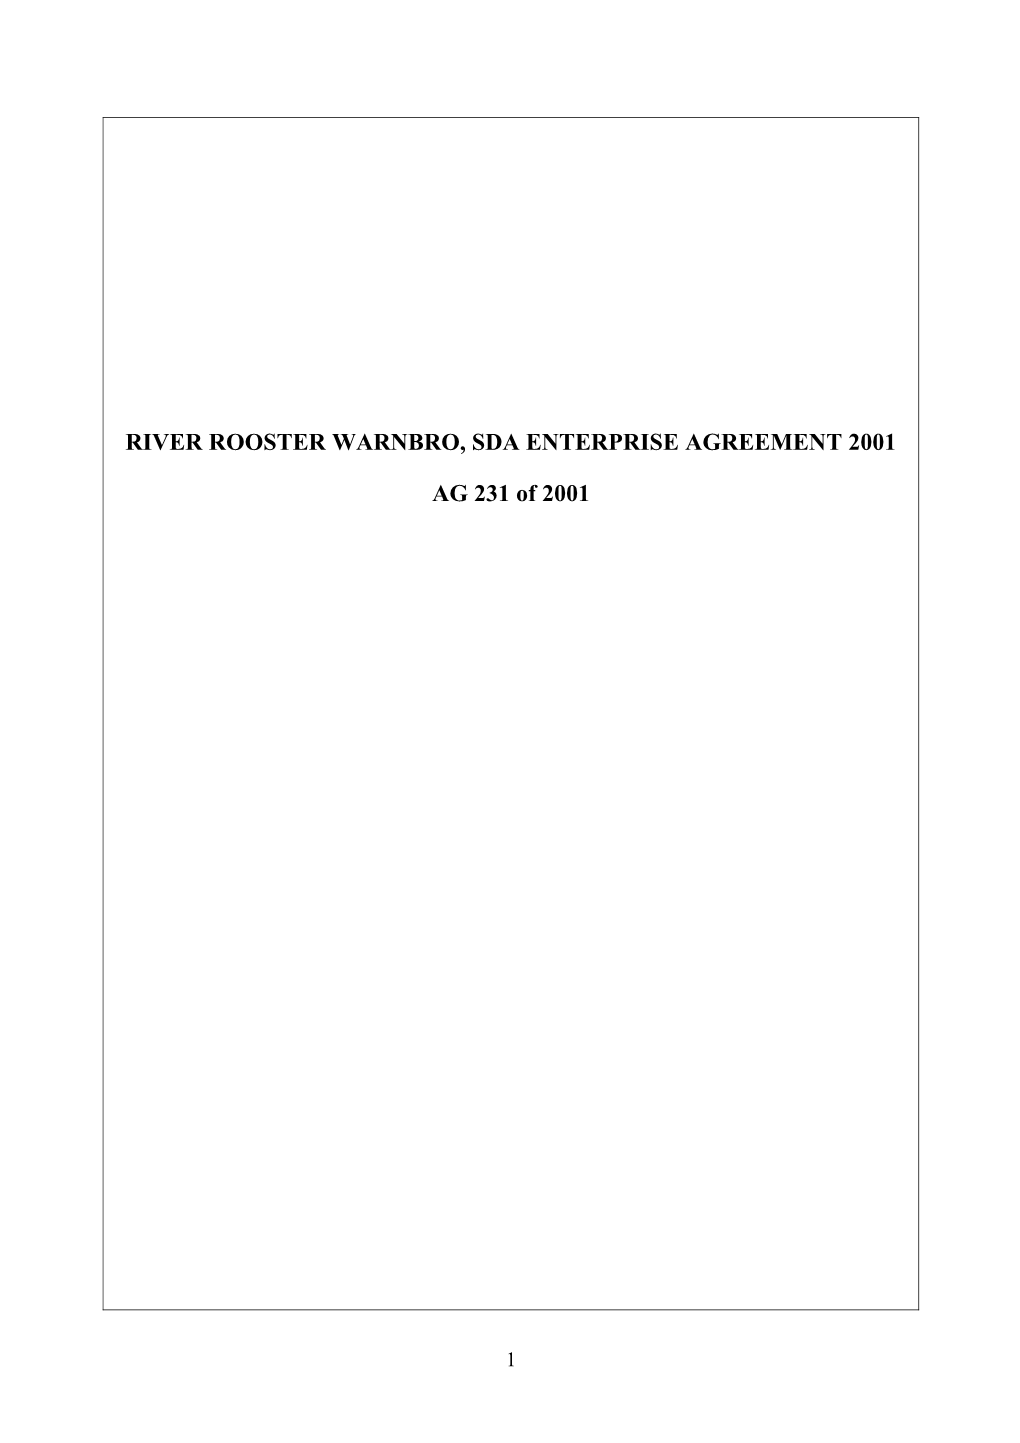 River Rooster Warnbro, Sda Enterprise Agreement 2001